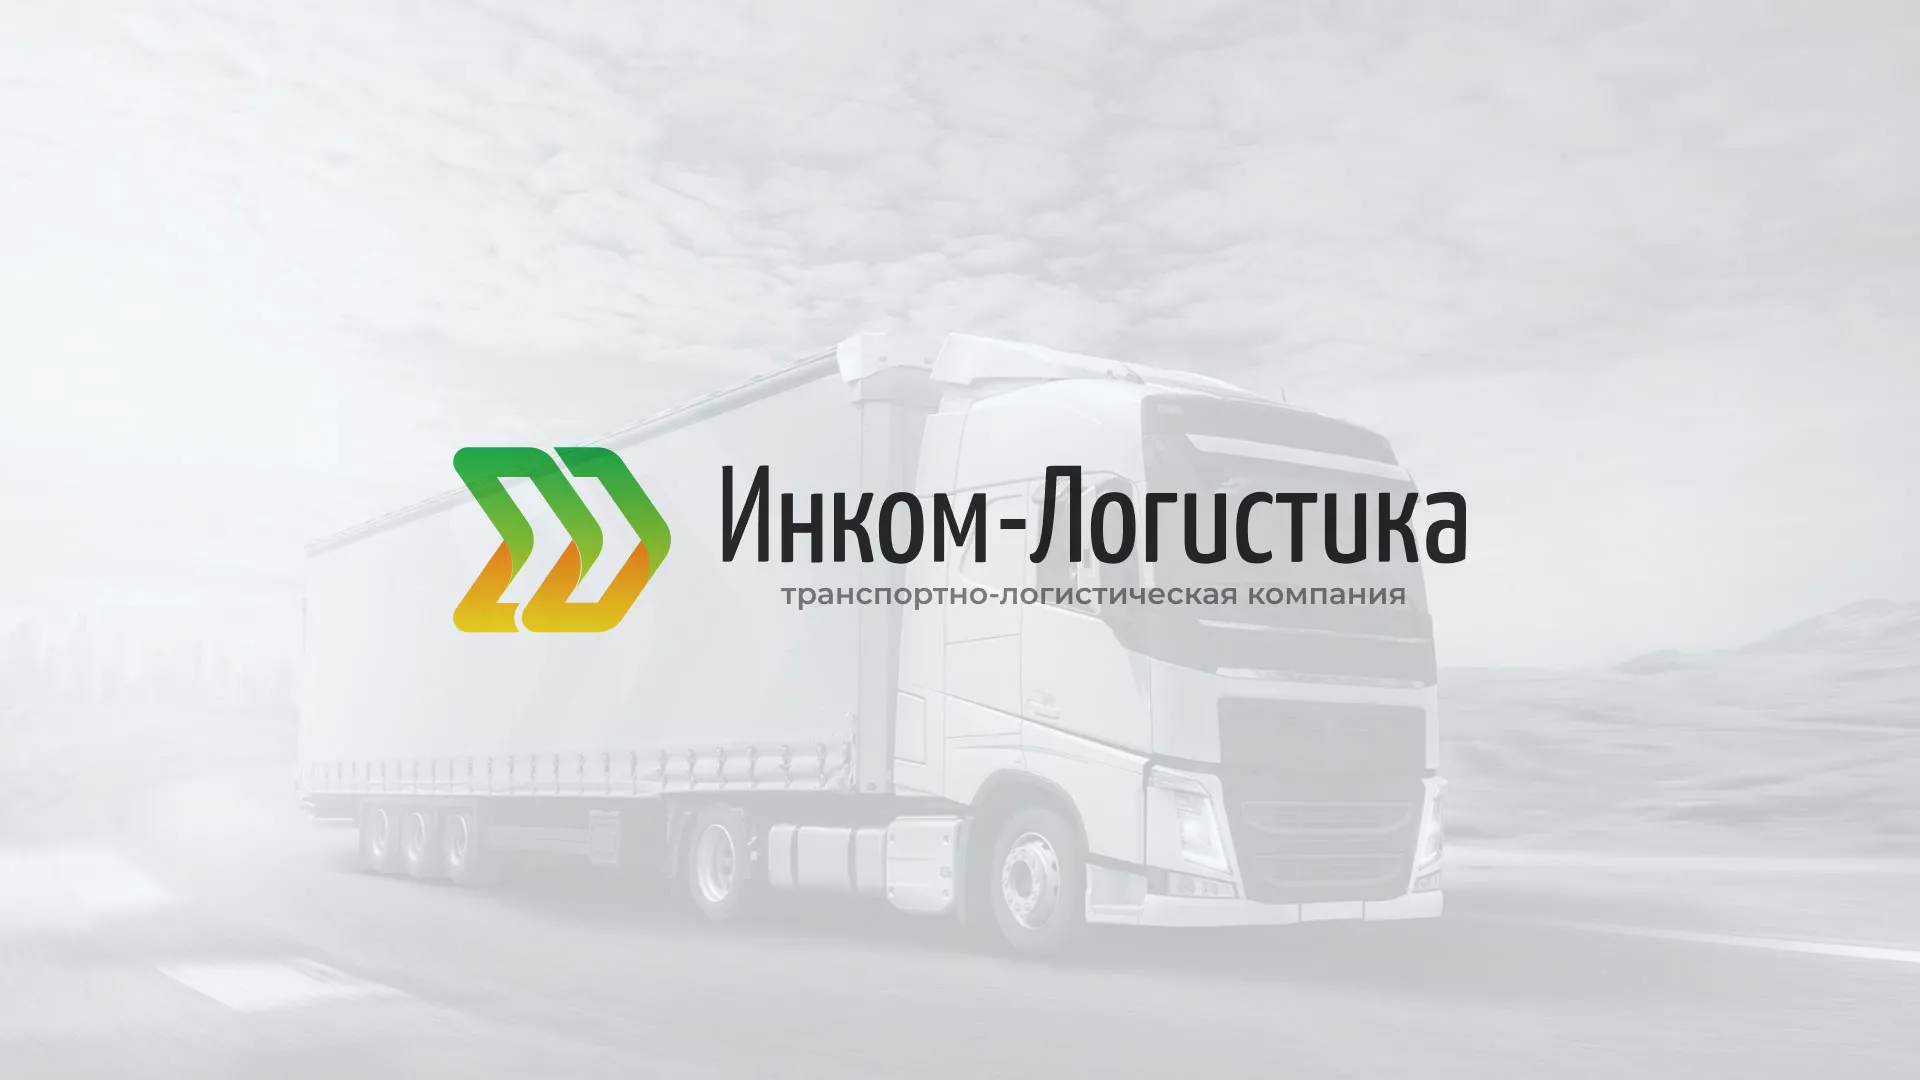 Разработка логотипа и сайта компании «Инком-Логистика» в Пестово